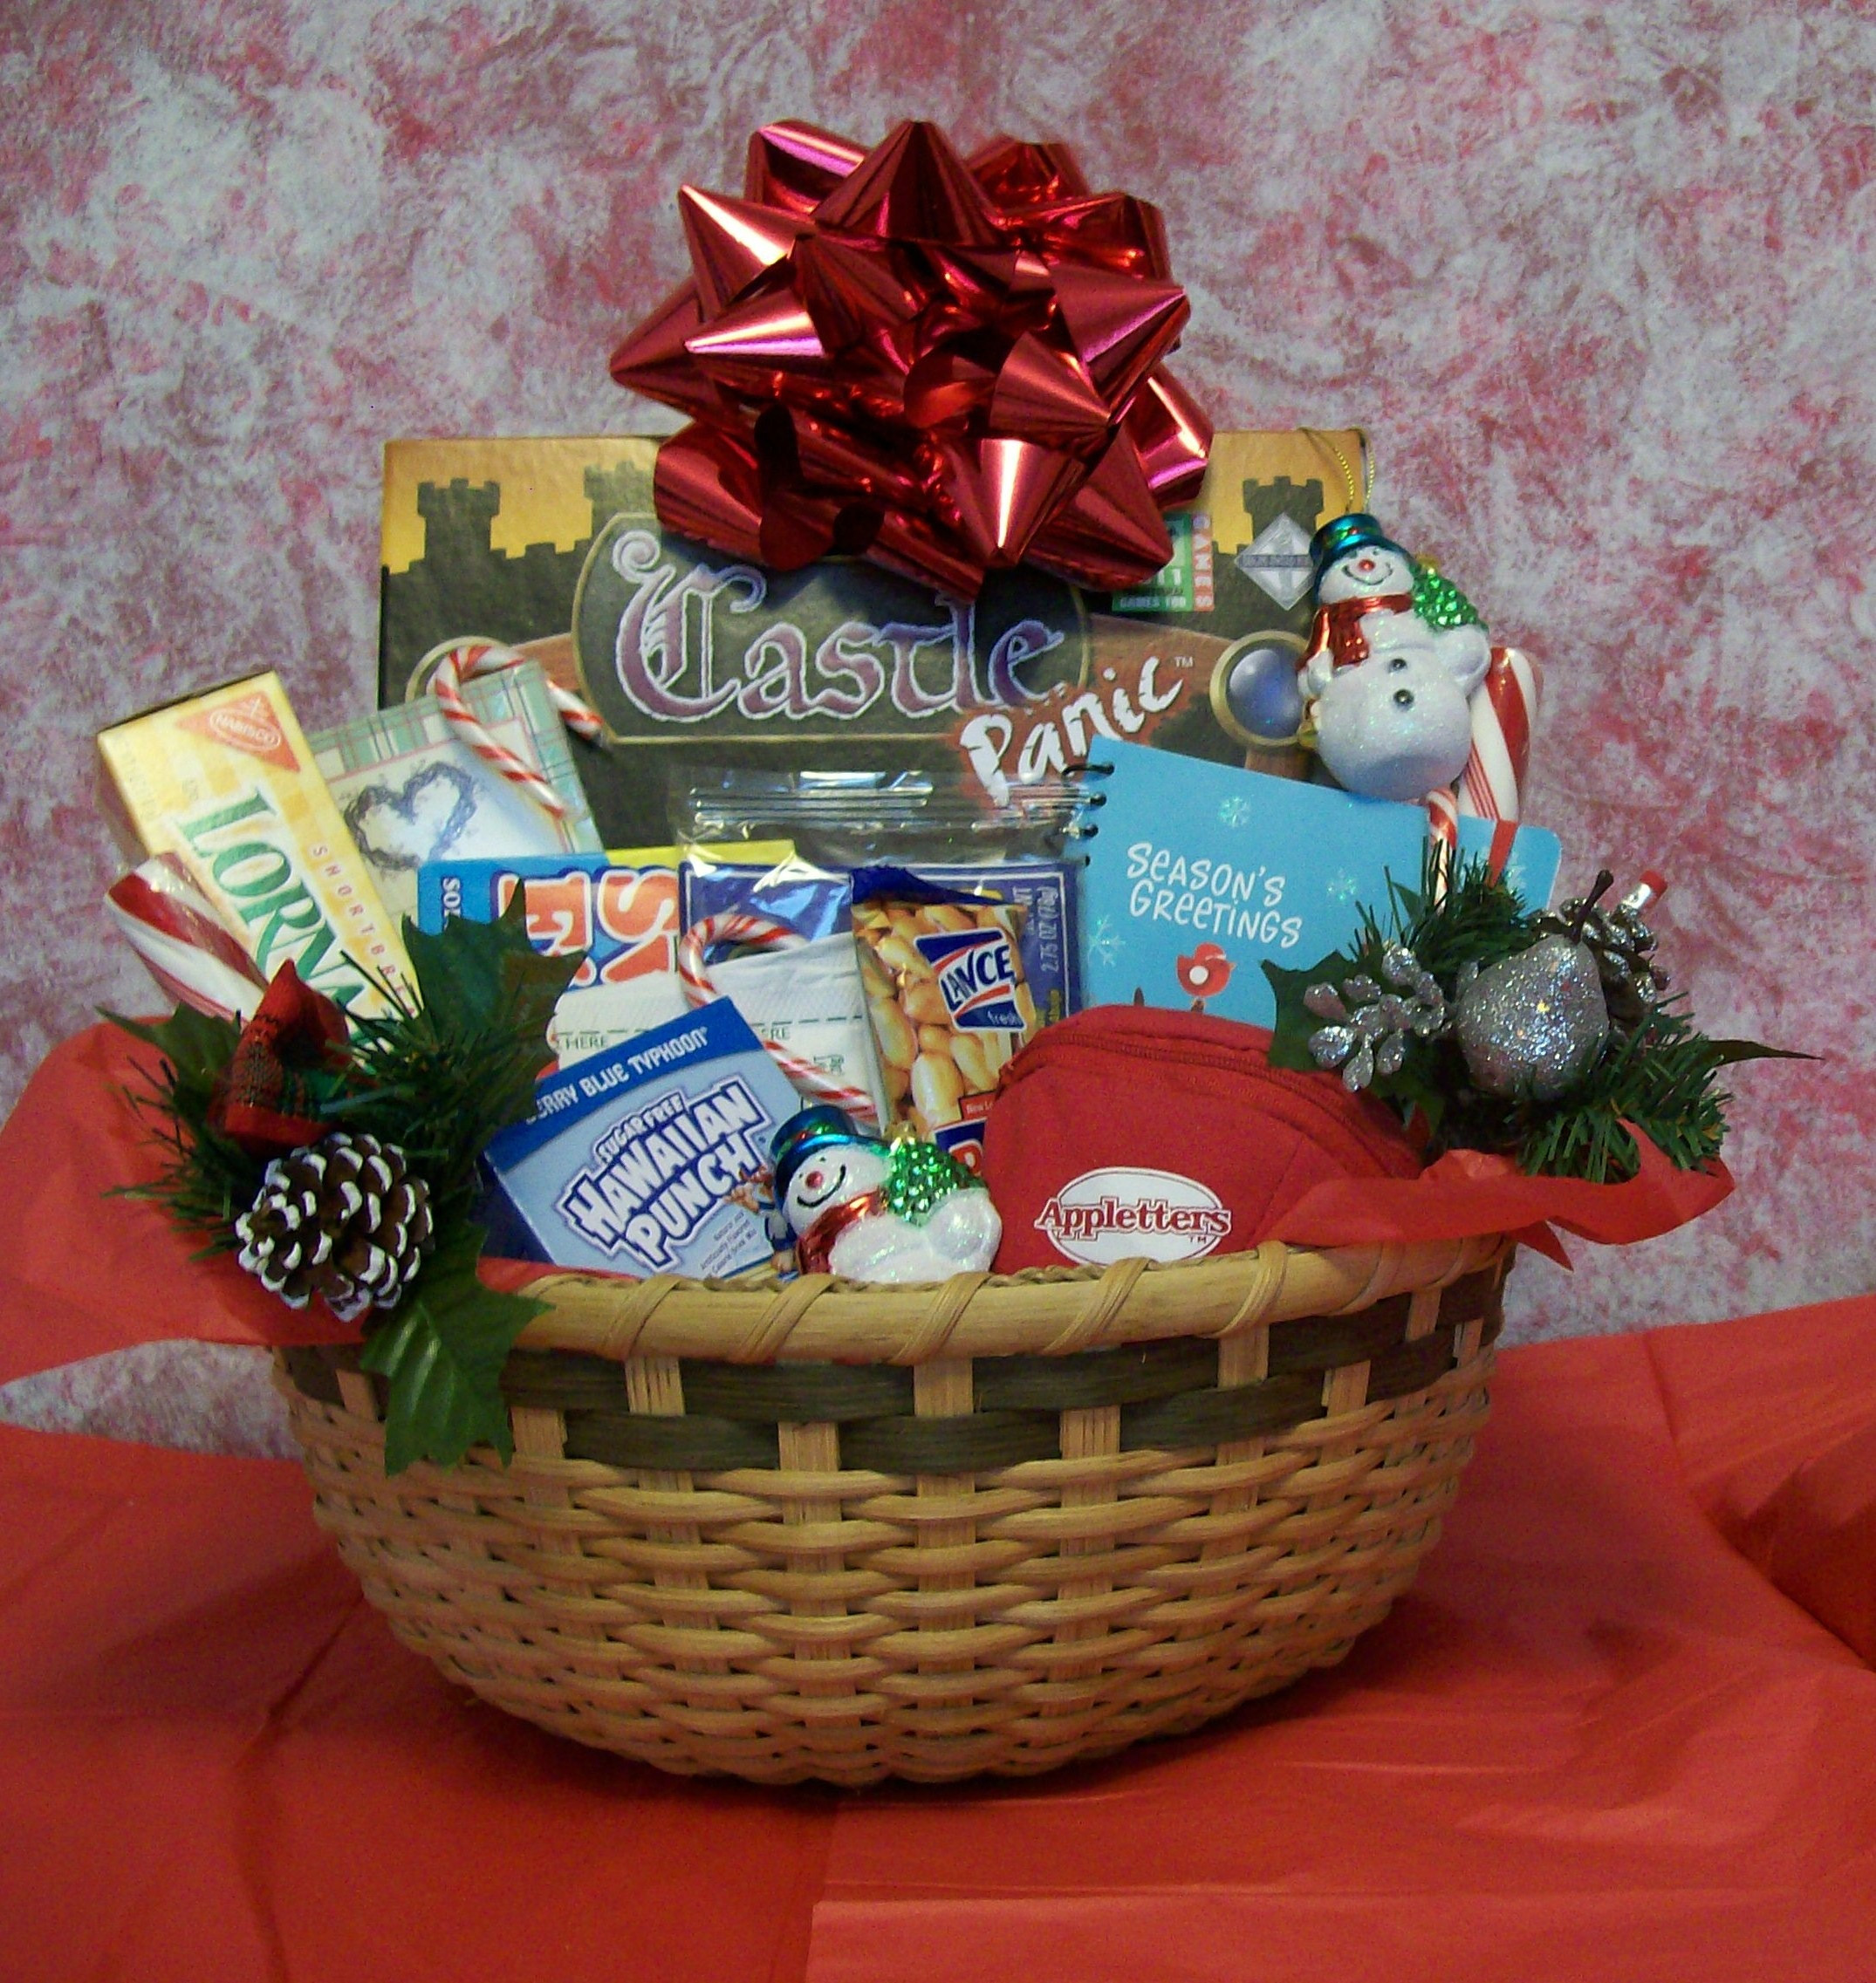 Family Gift Basket Ideas
 Family Gift Ideas For Christmas